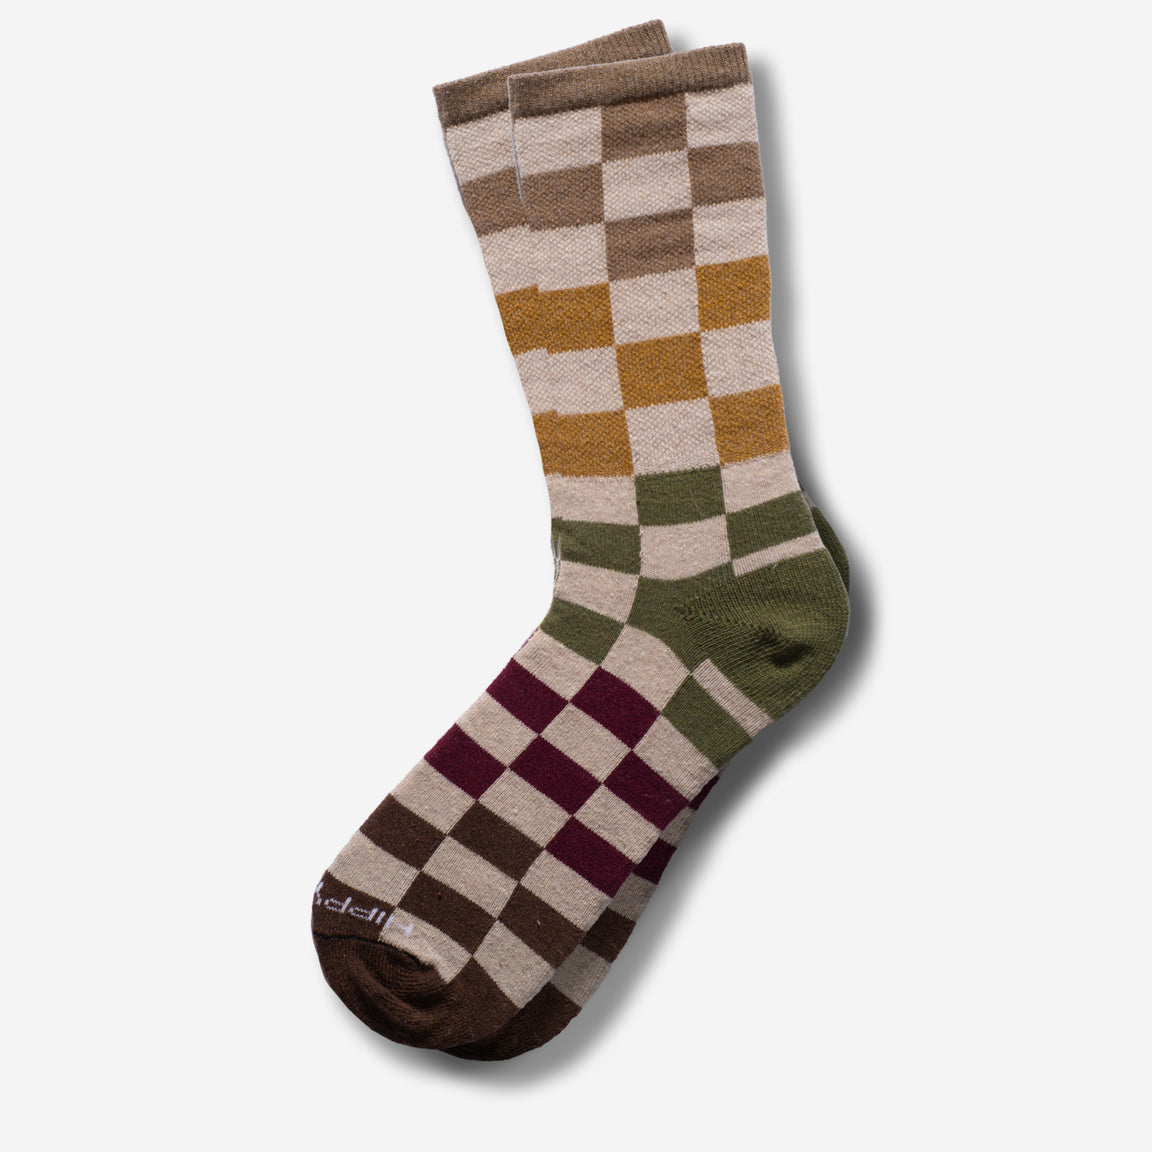 American Made Cotton Crew Socks - Hippy Feet